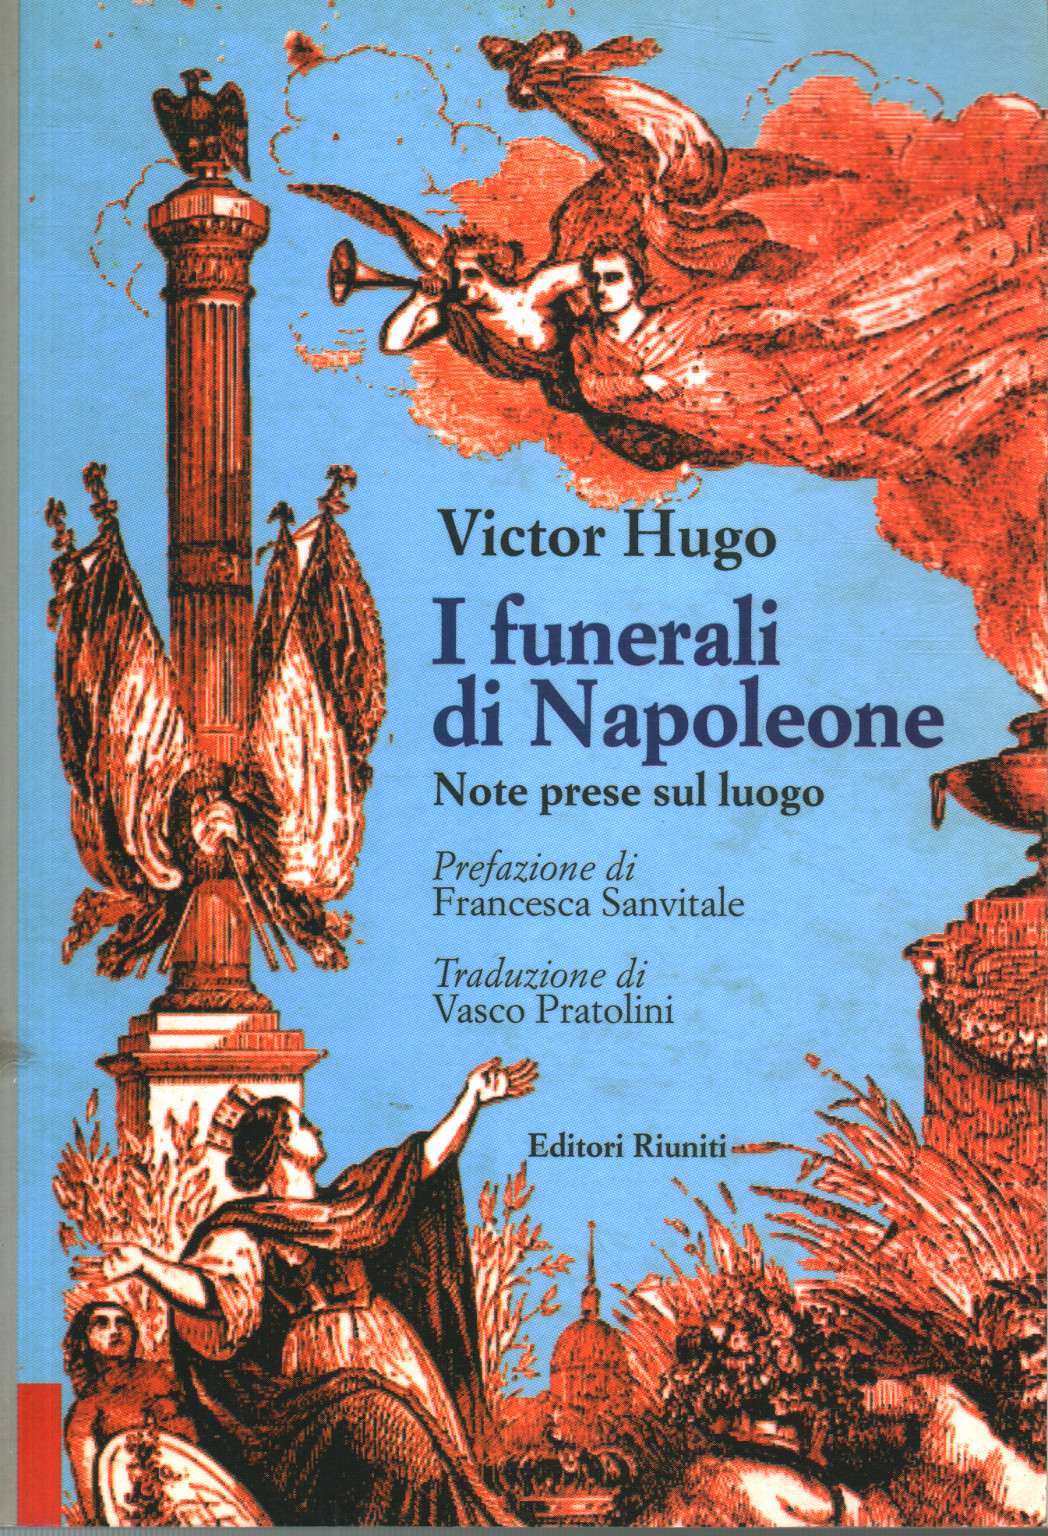 I funerali di Napoleone, Victor Hugo